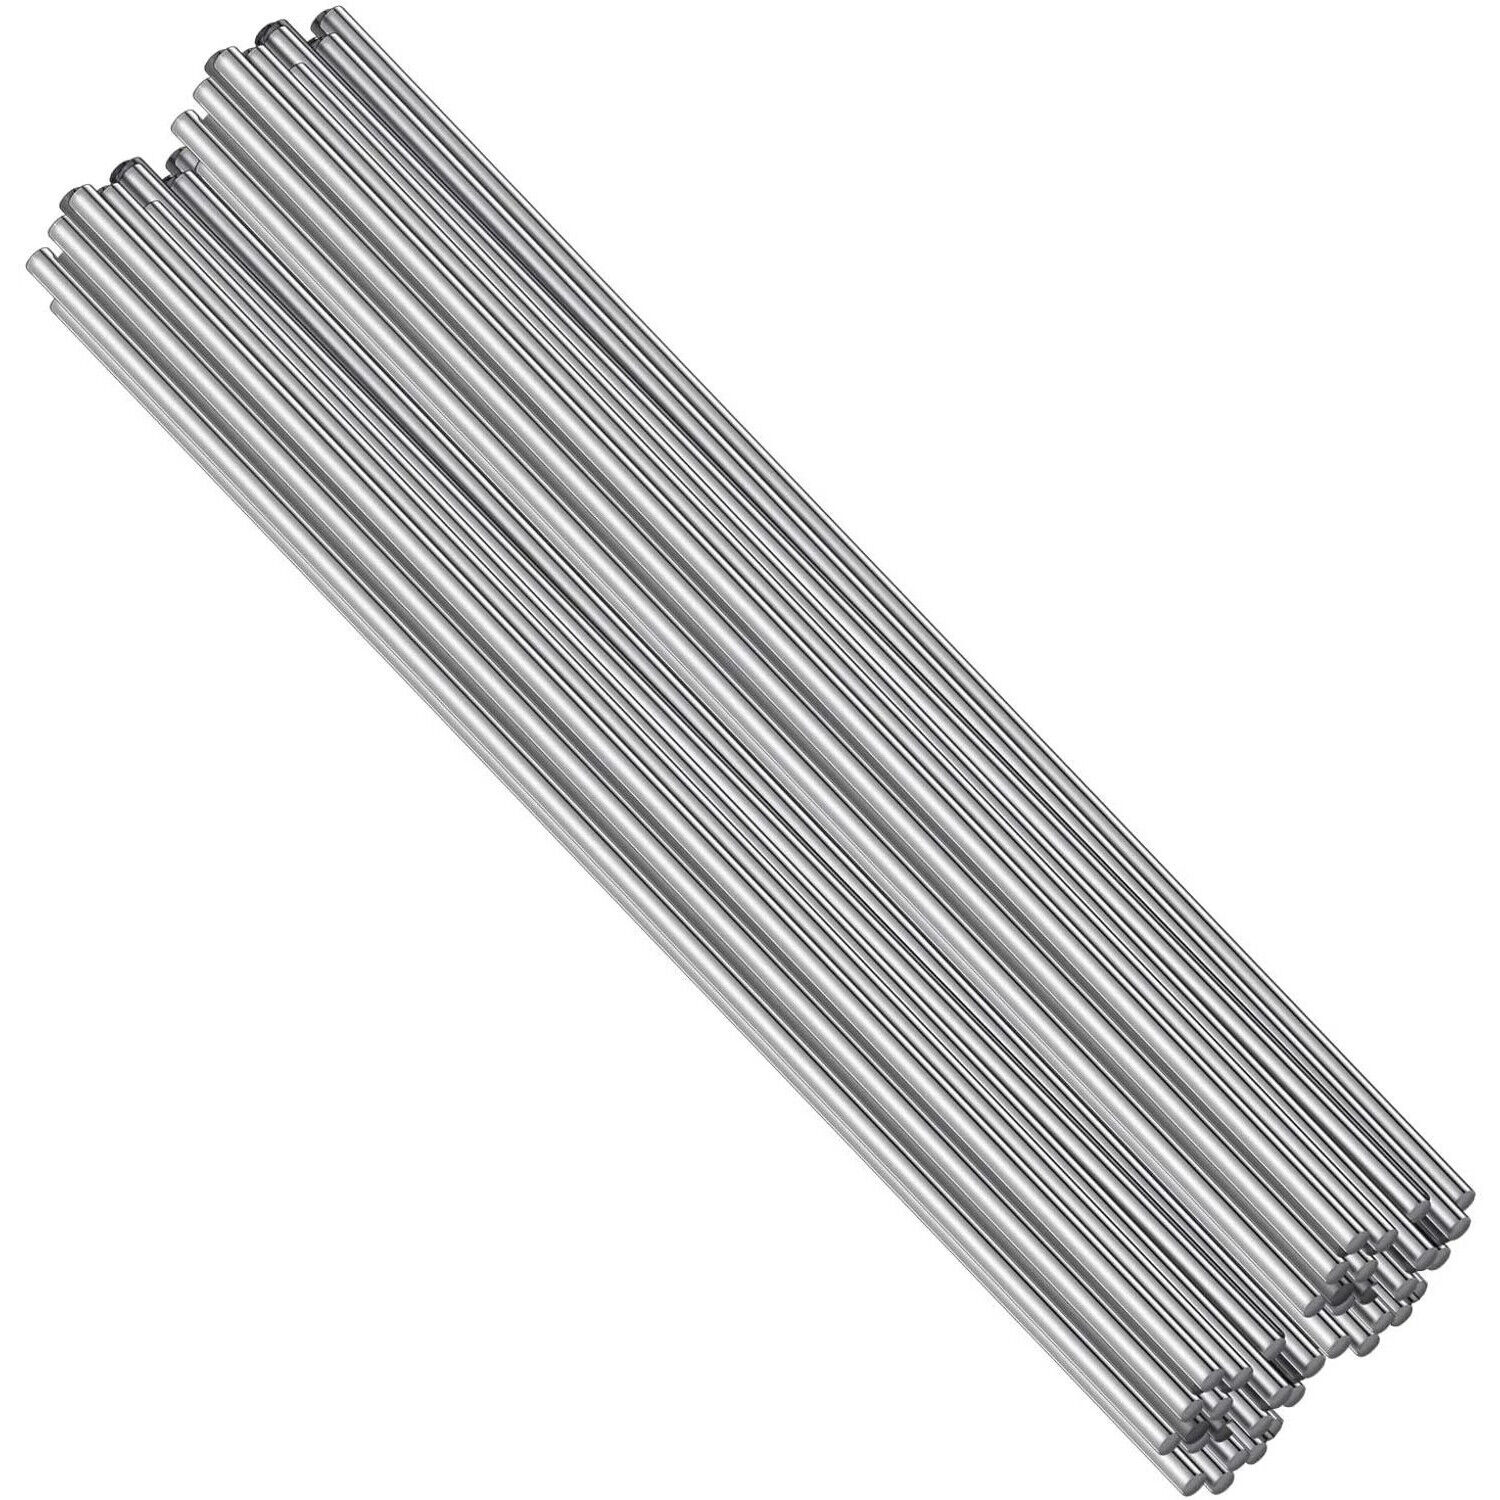 50pcs Aluminum Solution Welding Flux-Cored Rods Wire Brazing 5/6